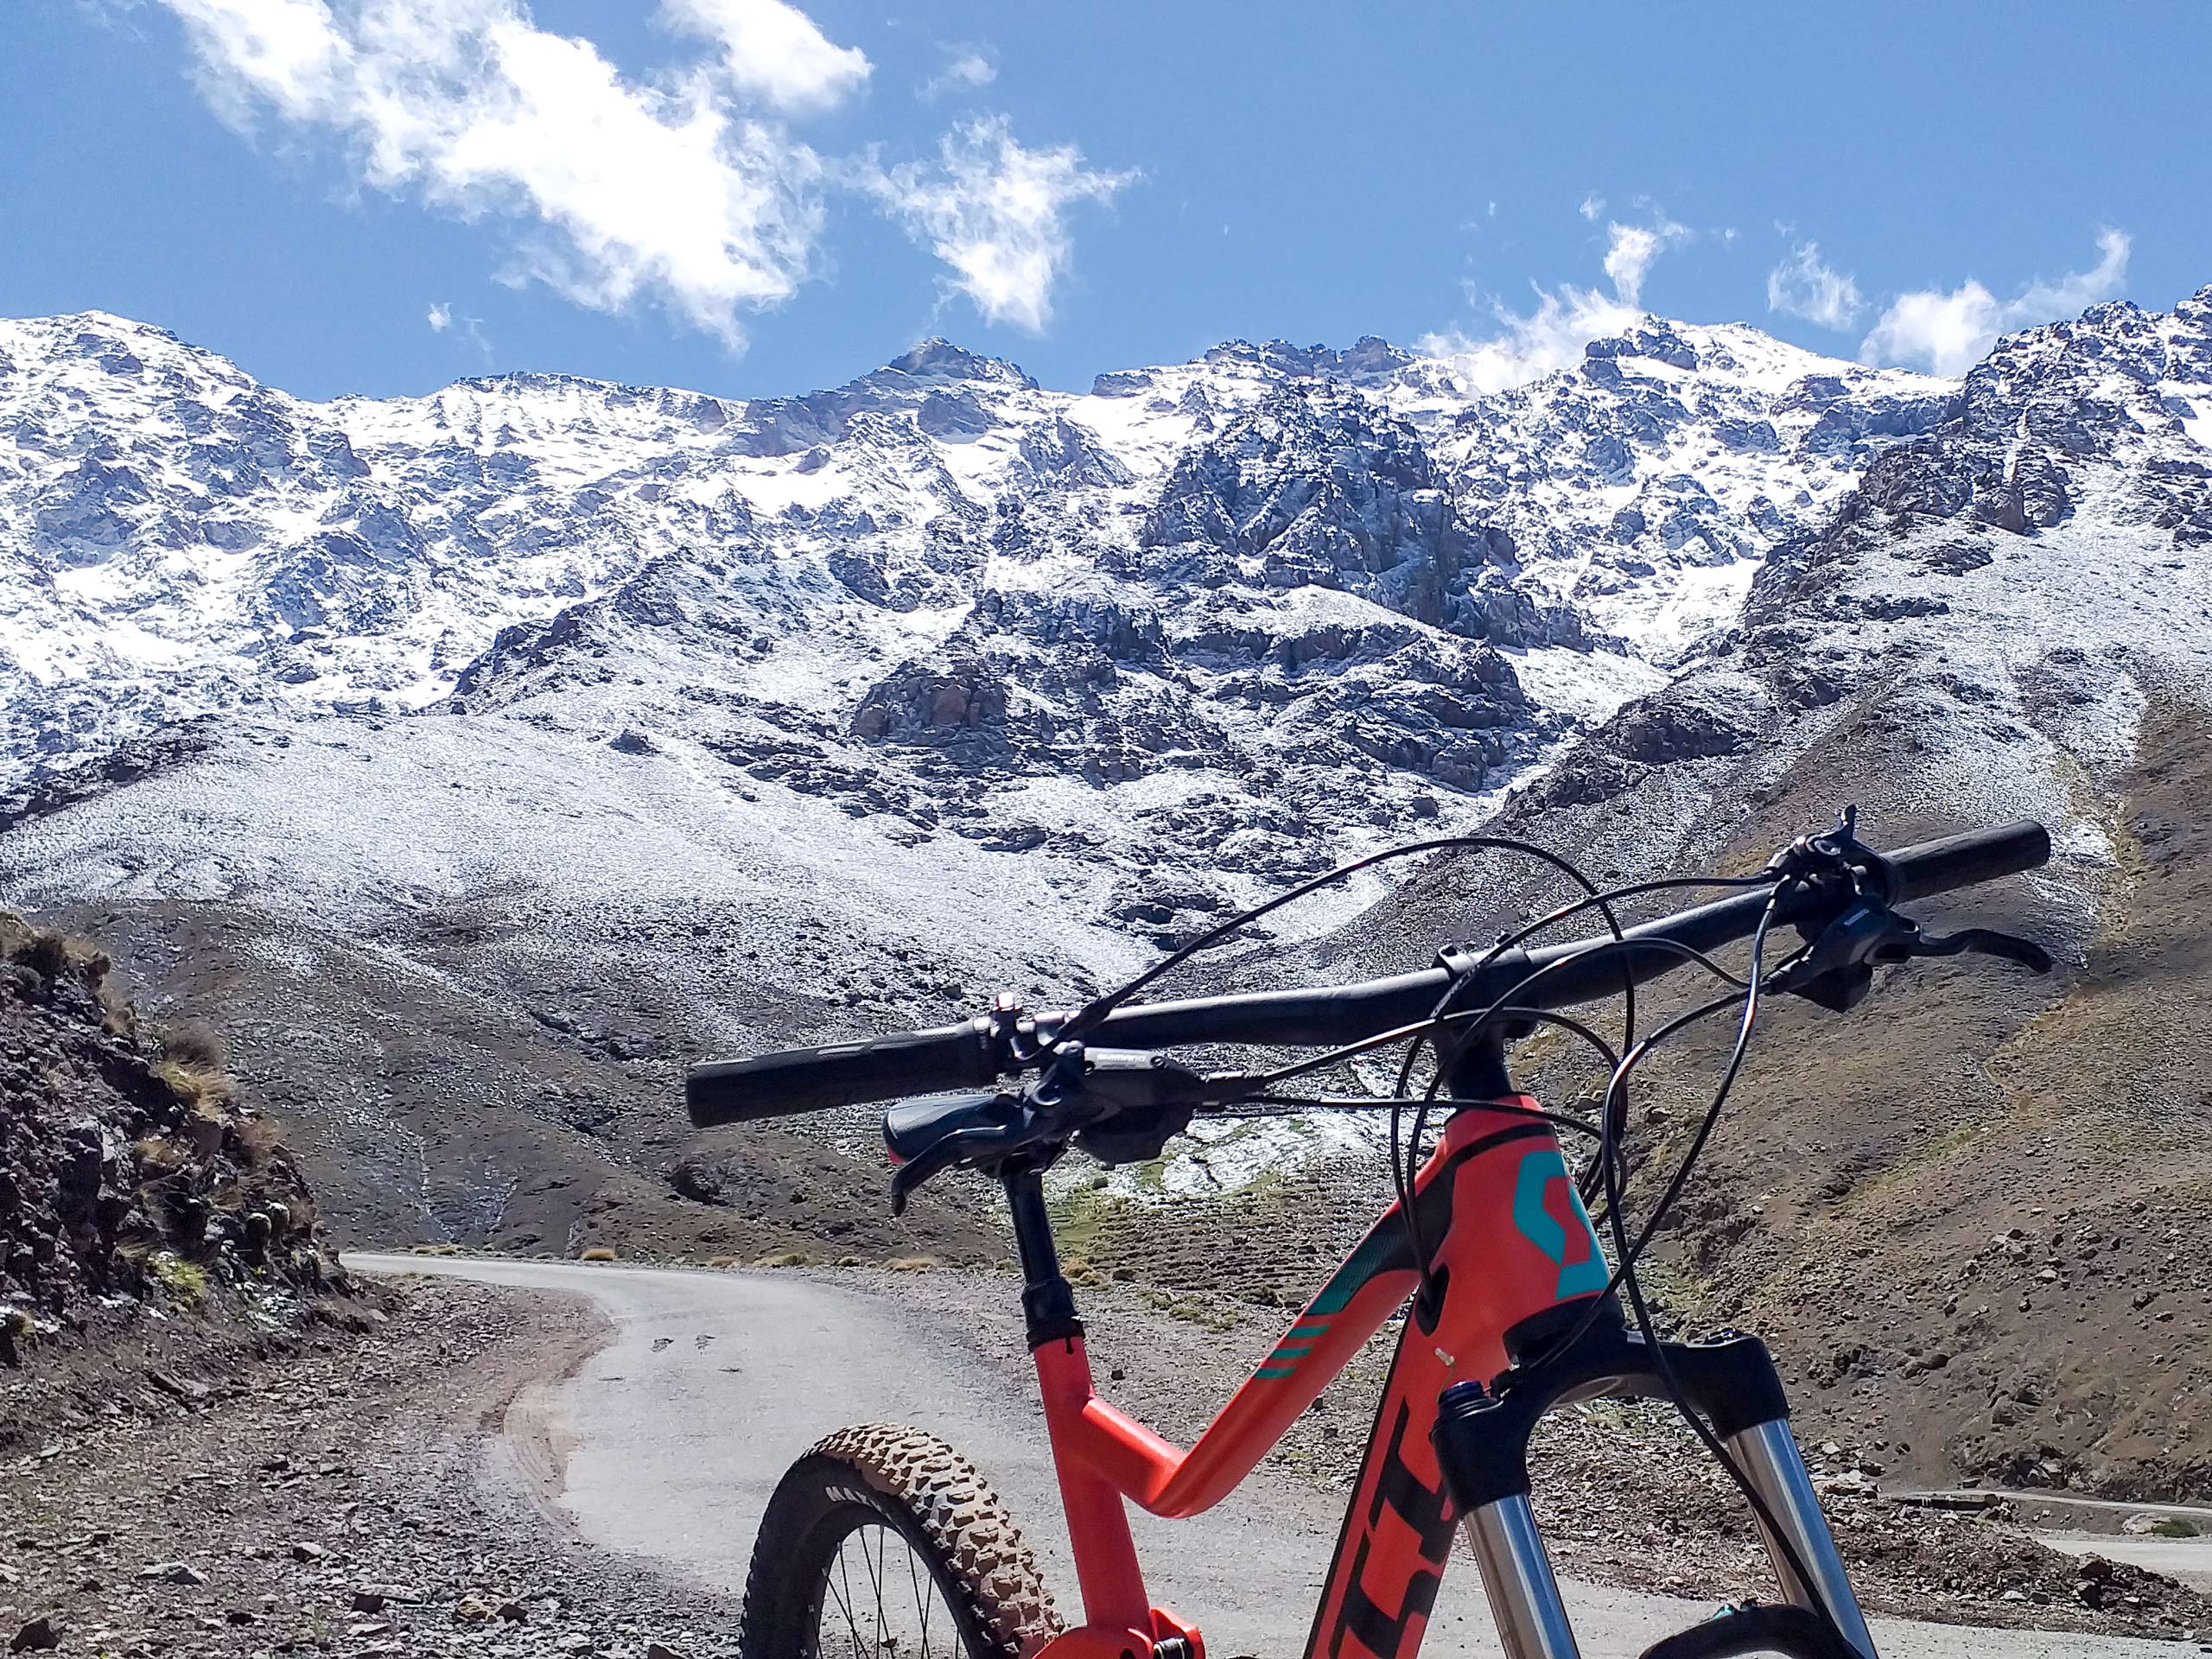 Bike on the mountain background